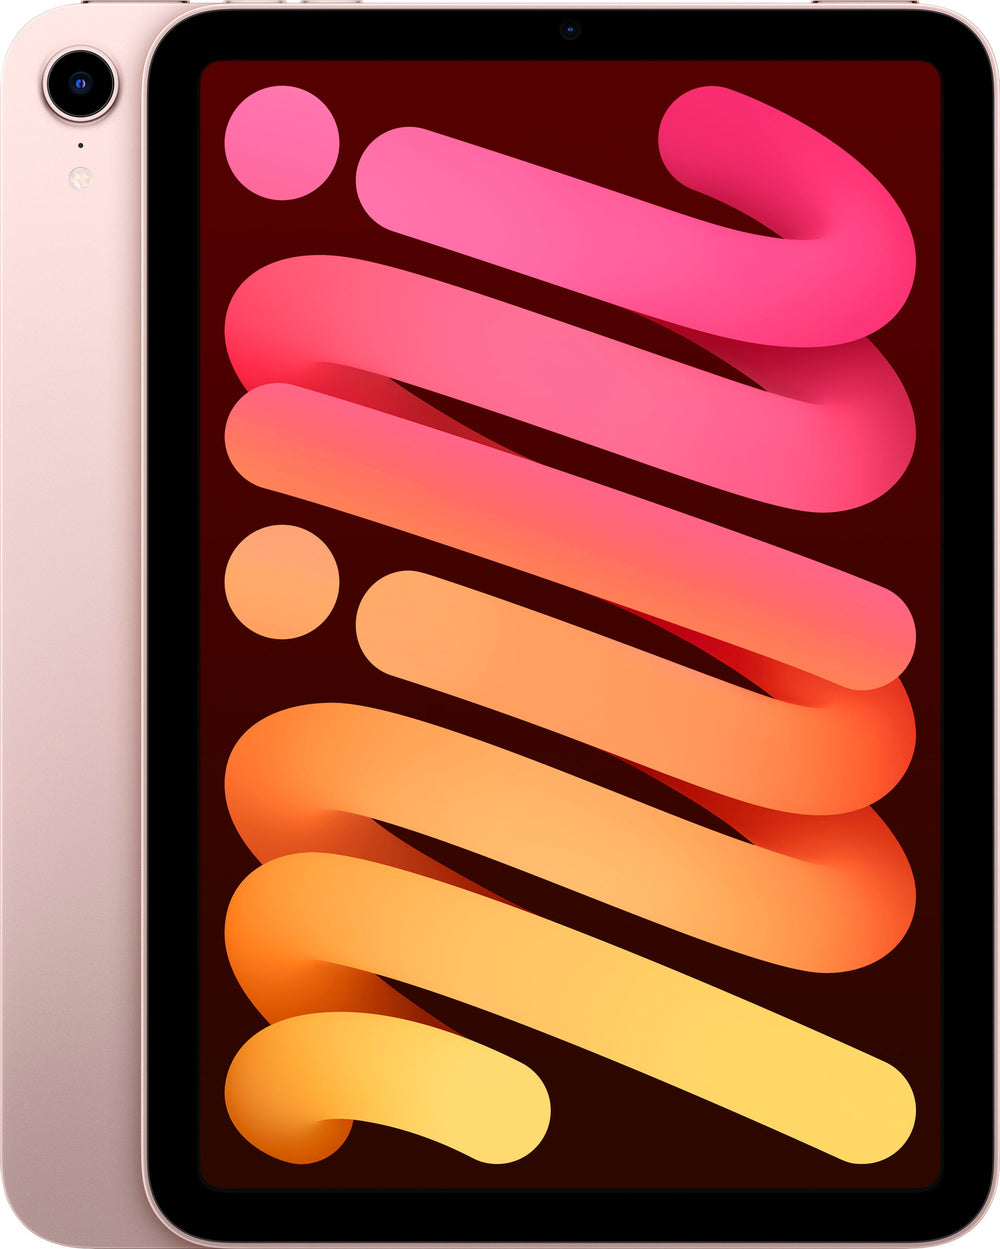 Apple - iPad mini (Latest Model) with Wi-Fi - 256GB - Pink_1